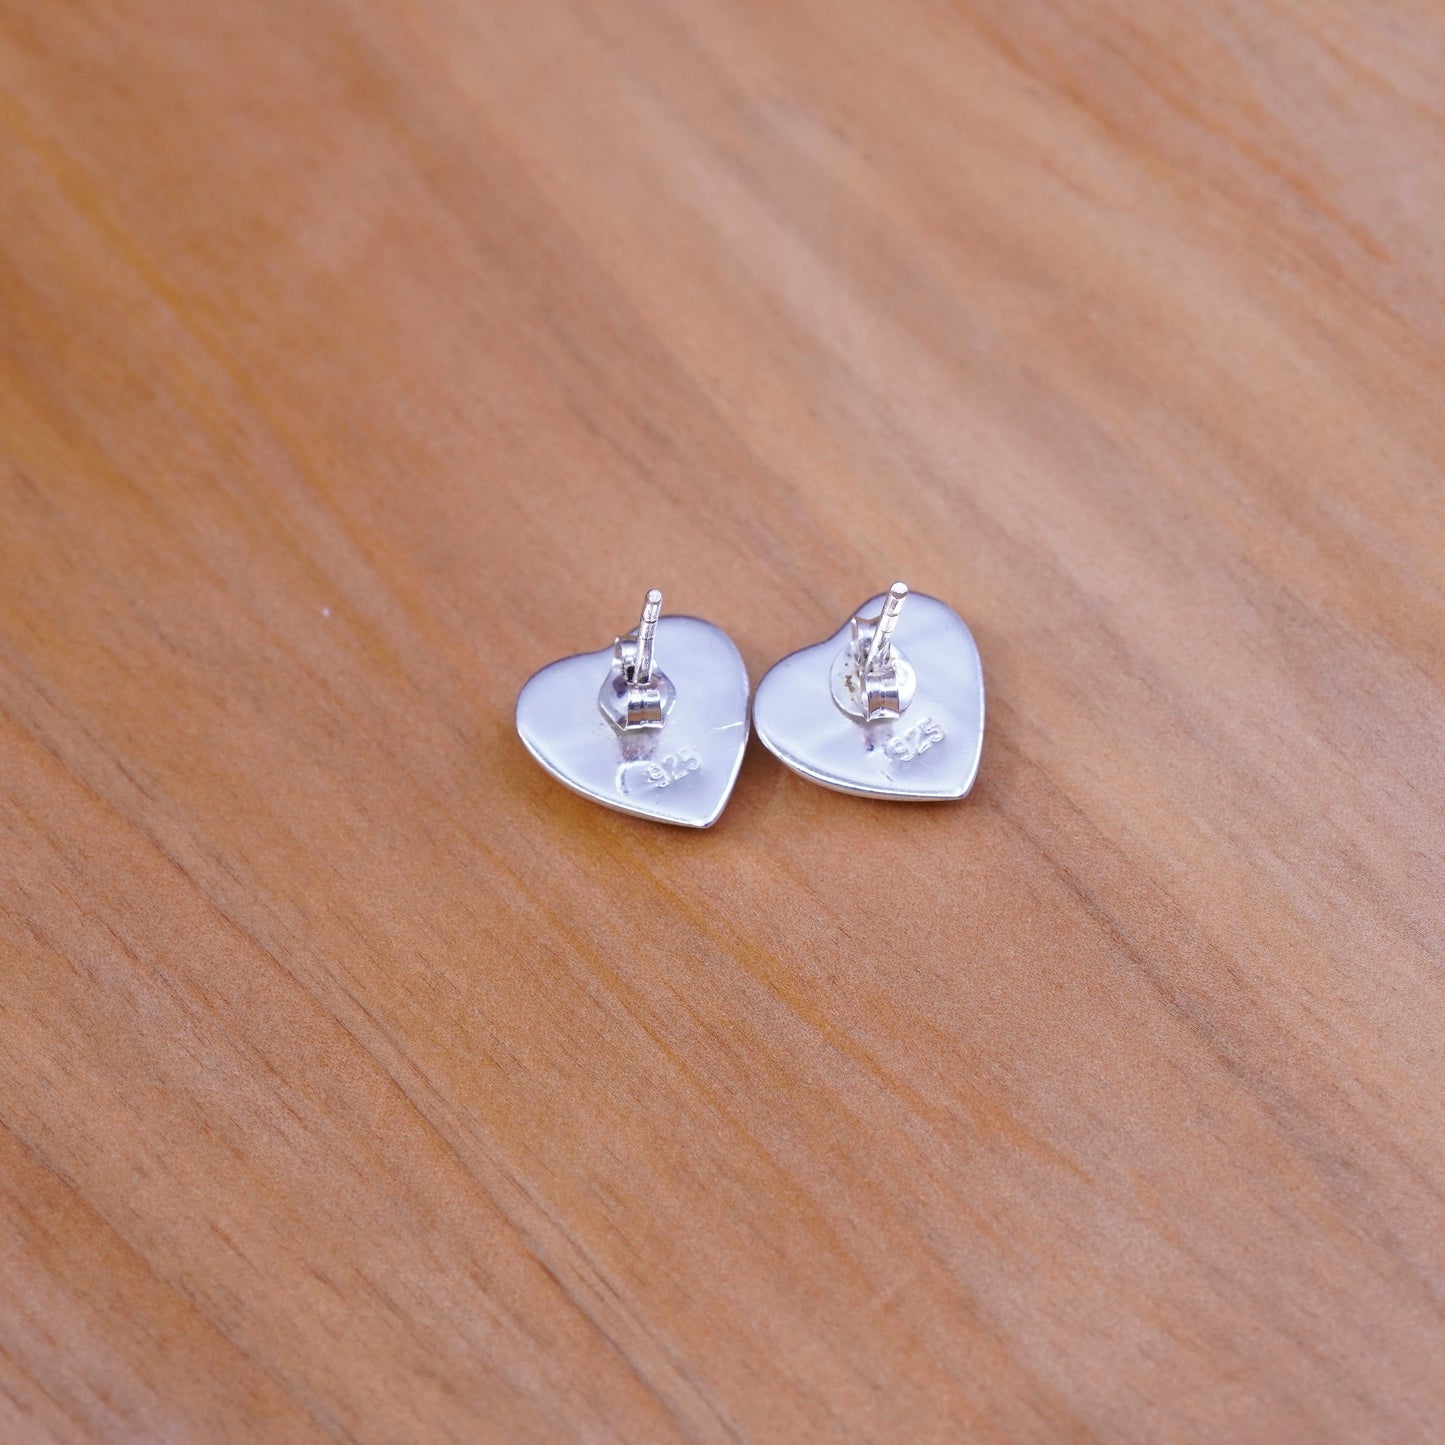 Vintage Sterling silver handmade earrings, 925 heart studs